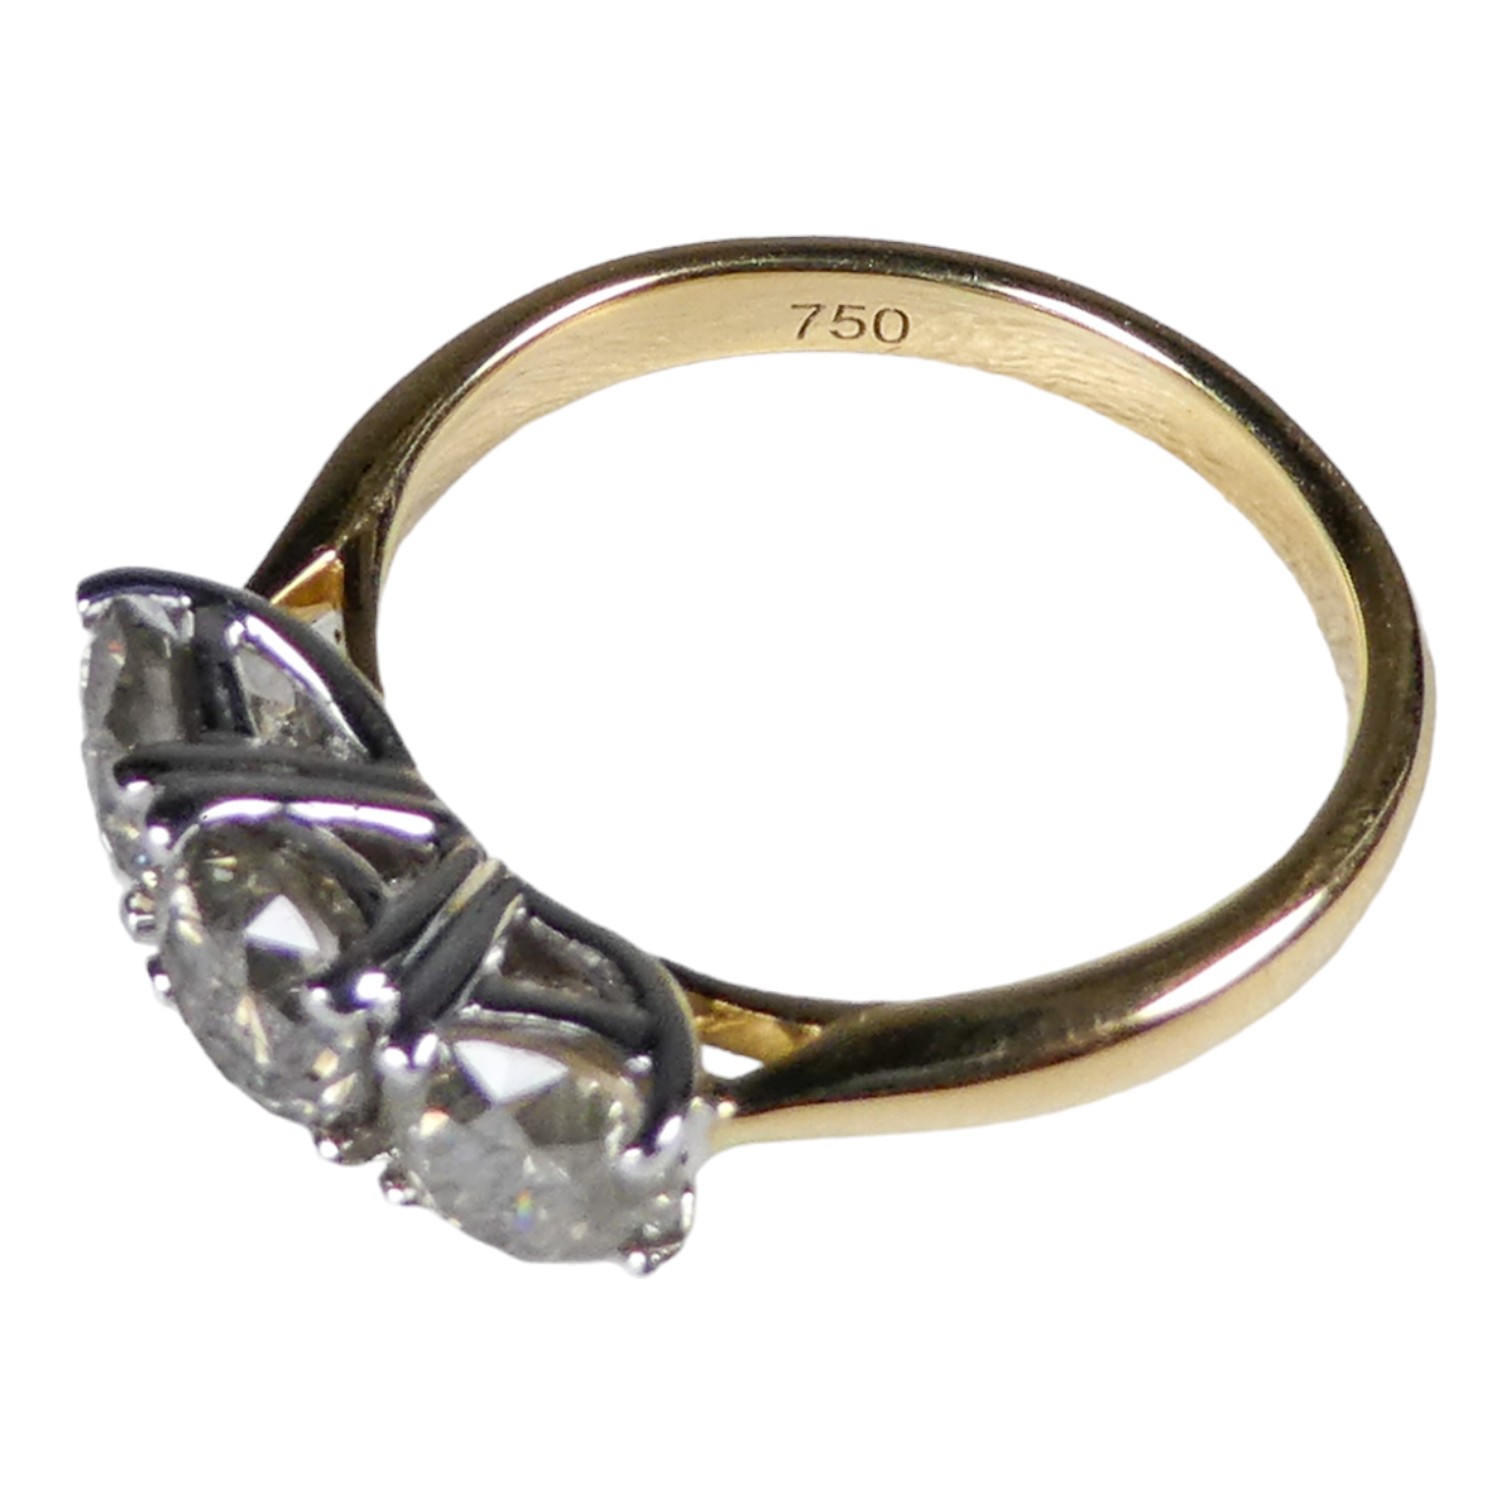 An 18ct white and yellow gold circular brilliant cut three stone diamond ring - diamond weight 1. - Image 3 of 4